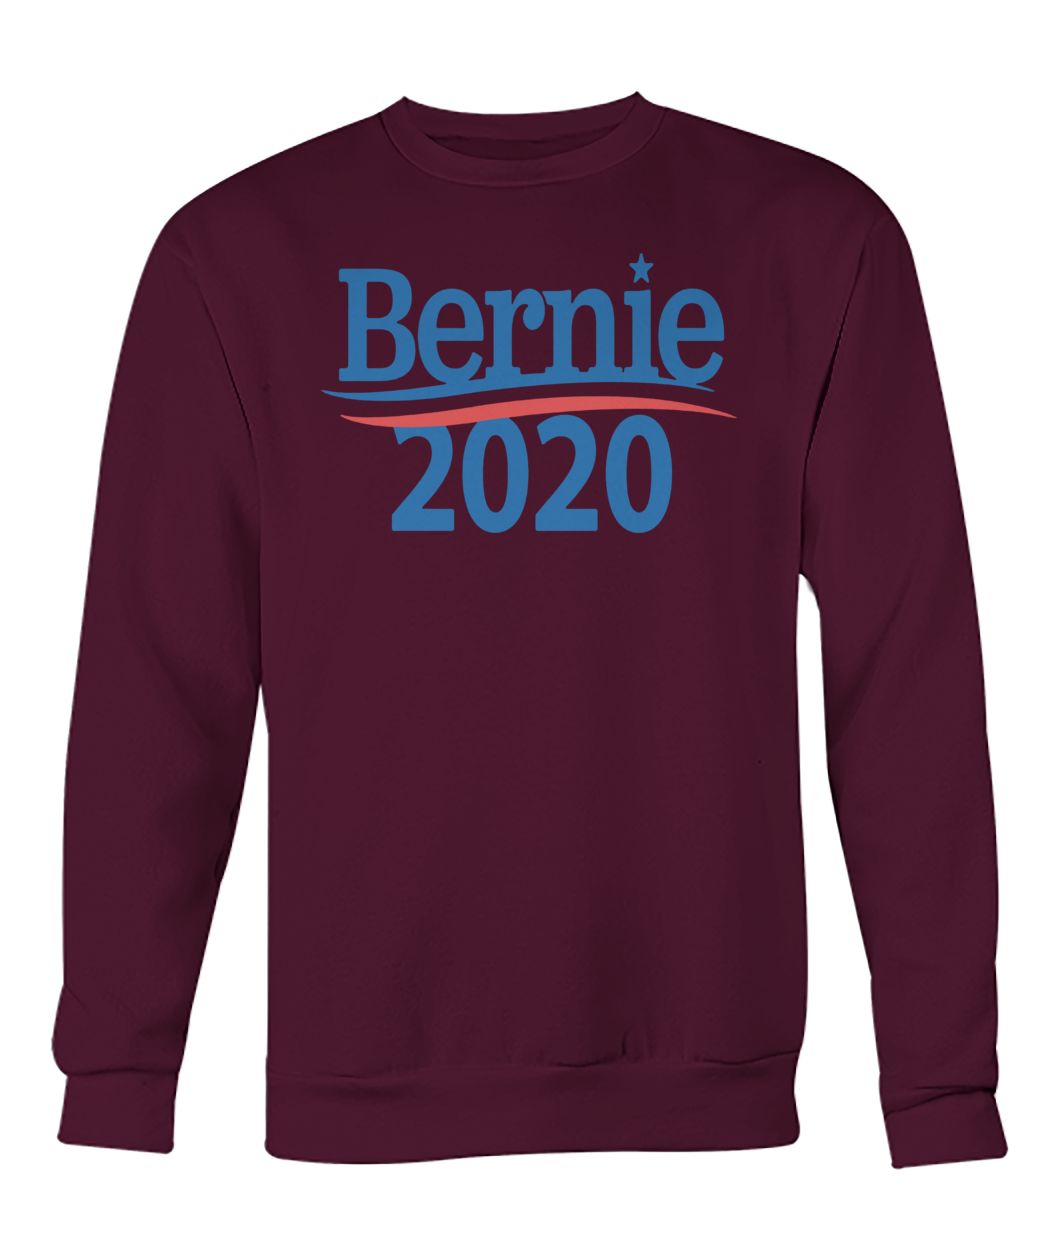 Bernie sanders for president in 2020 crew neck sweatshirt